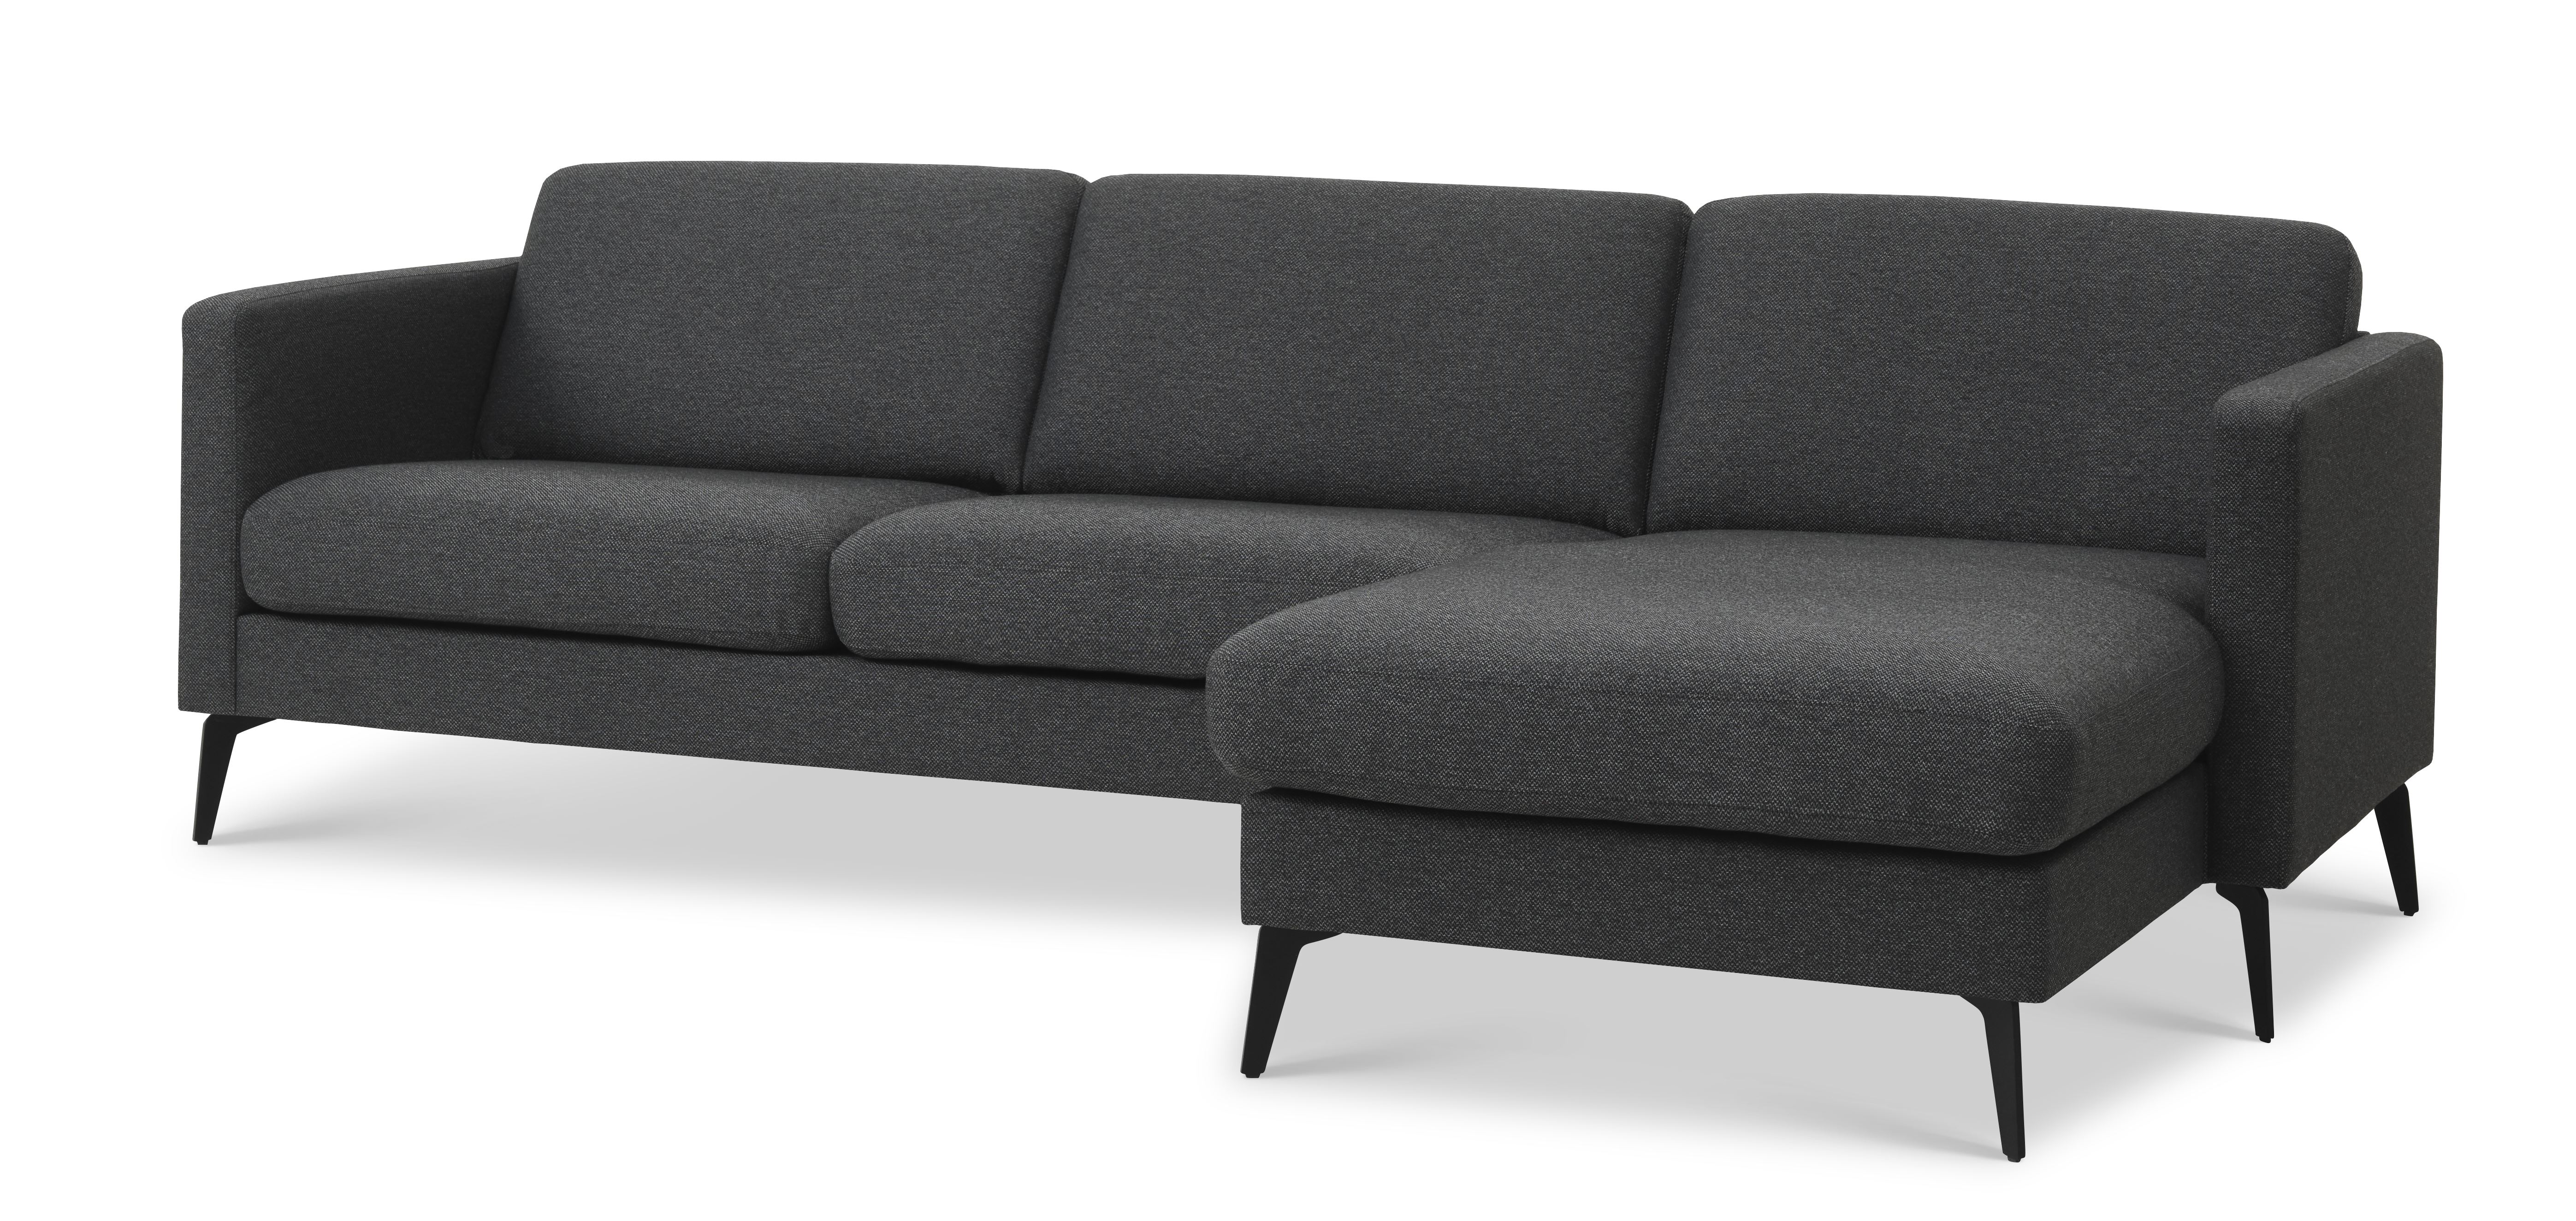 Ask sæt 51 3D sofa, m. chaiselong - antracitgrå polyester stof og Eiffel ben